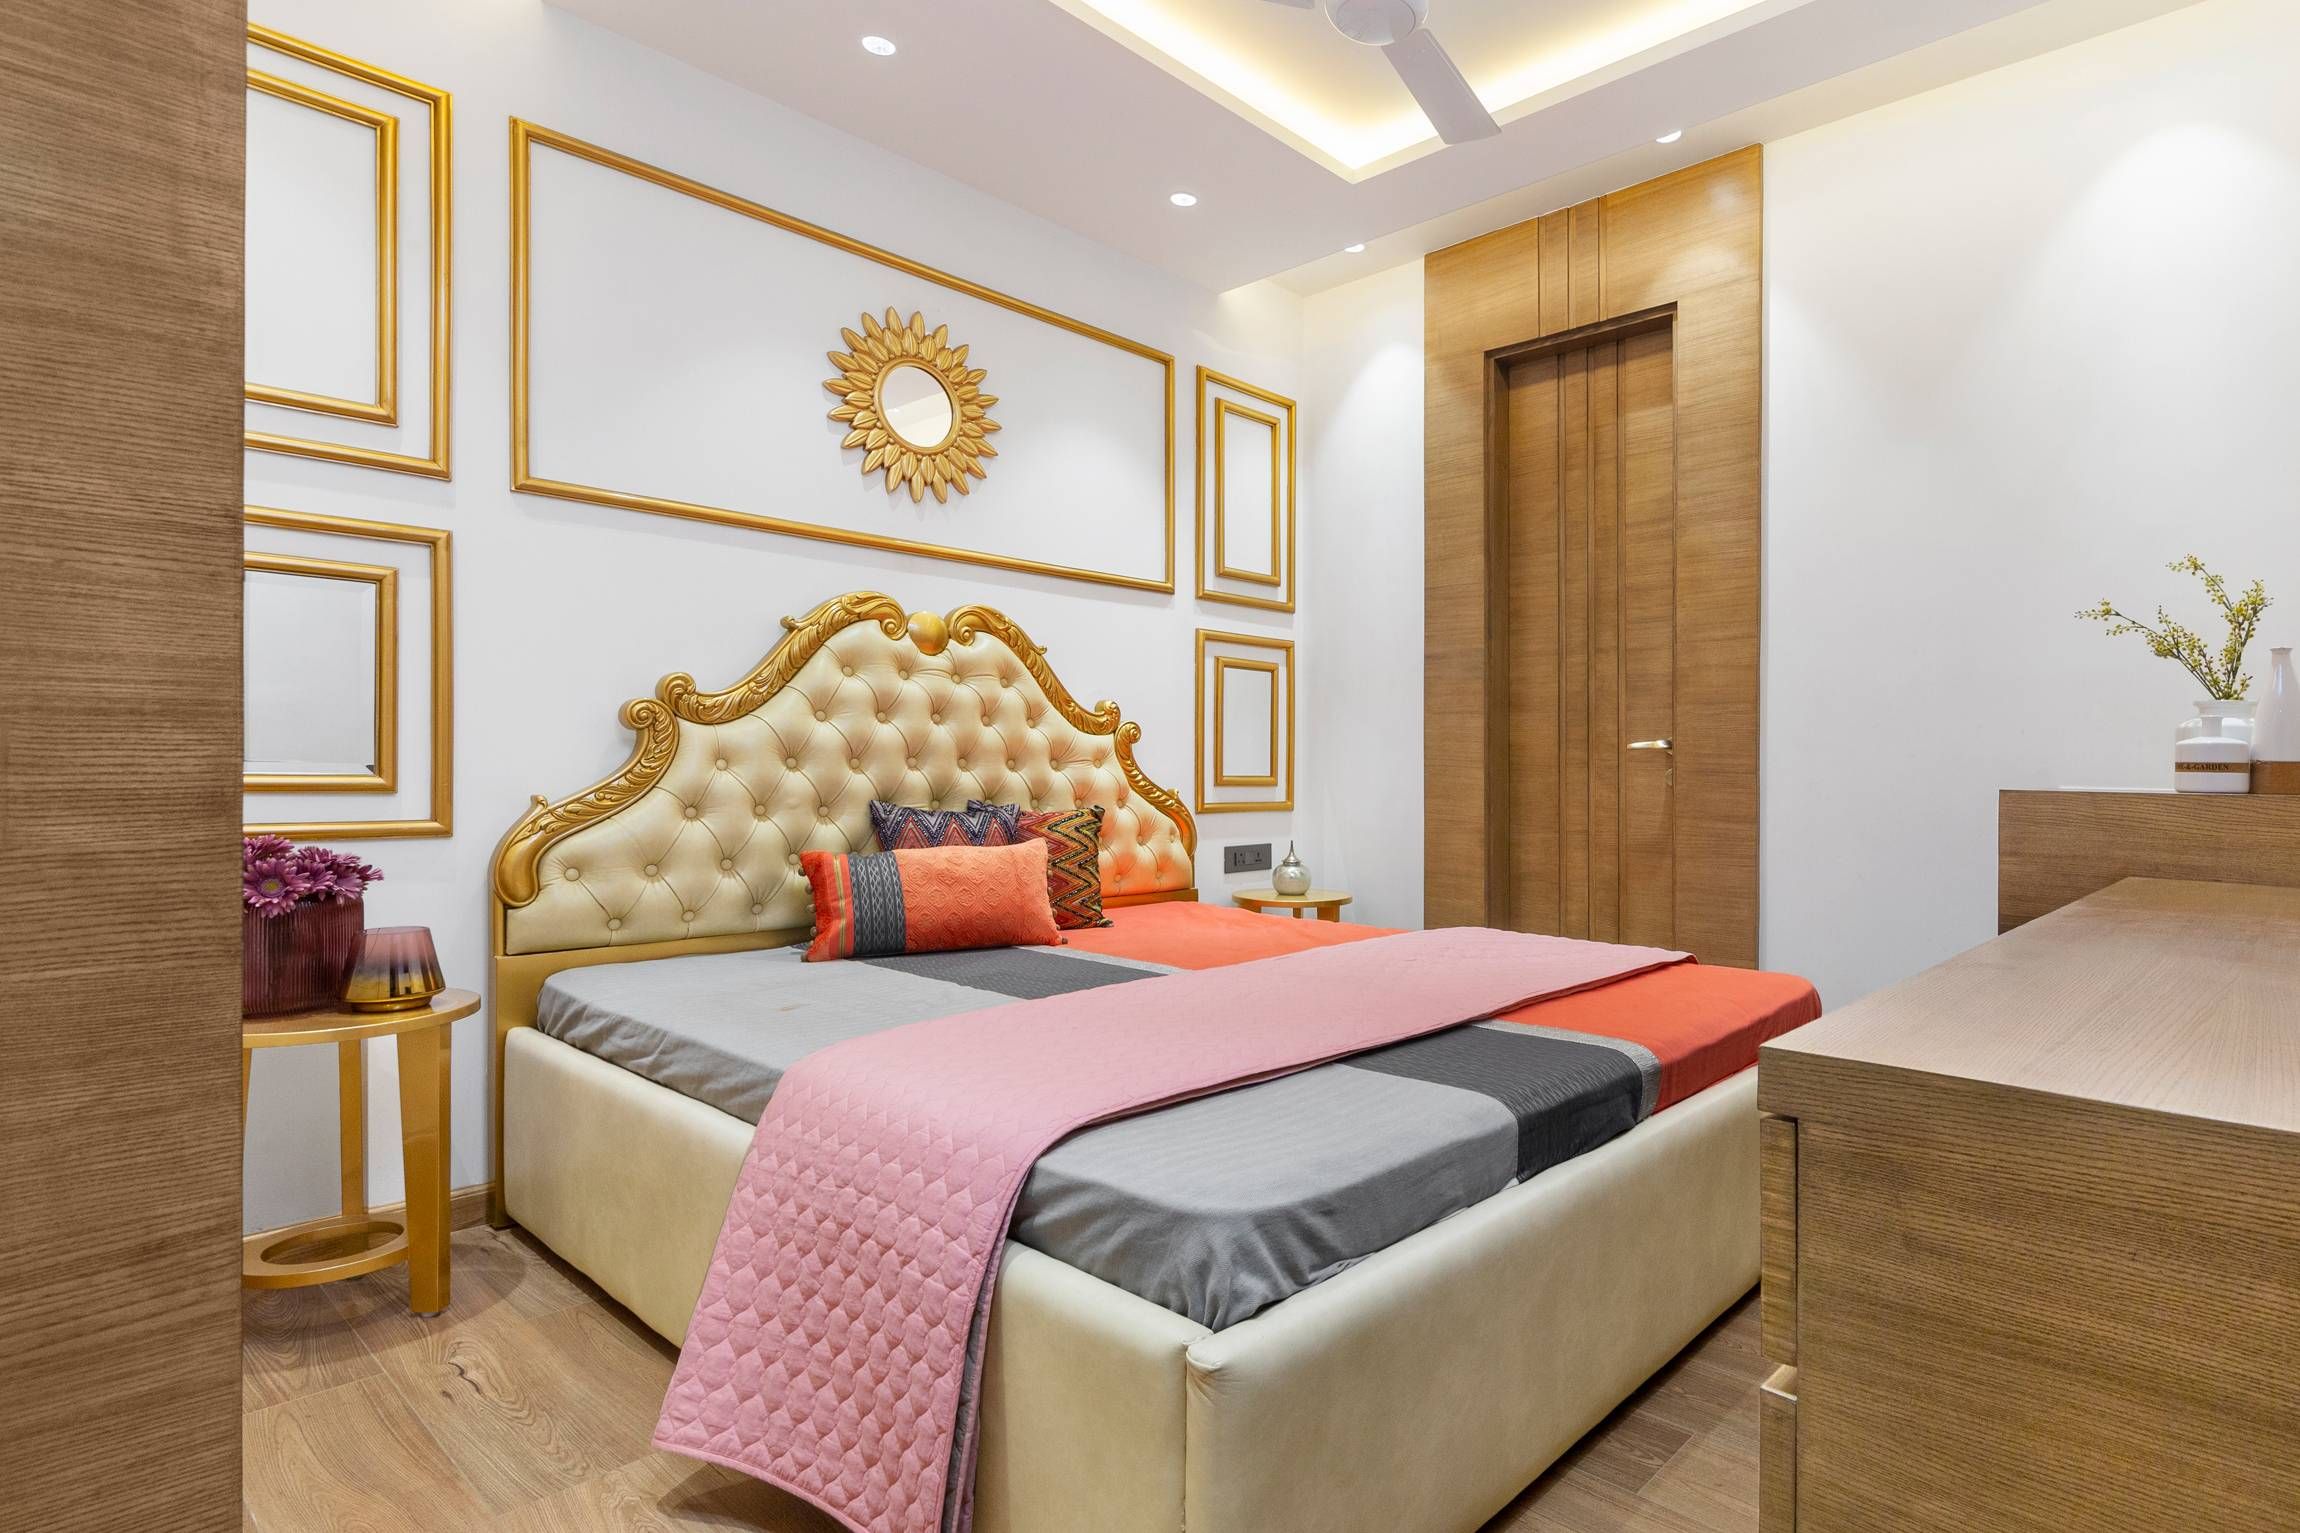 Contemporaru Bedroom Wall Design With Golden Trims